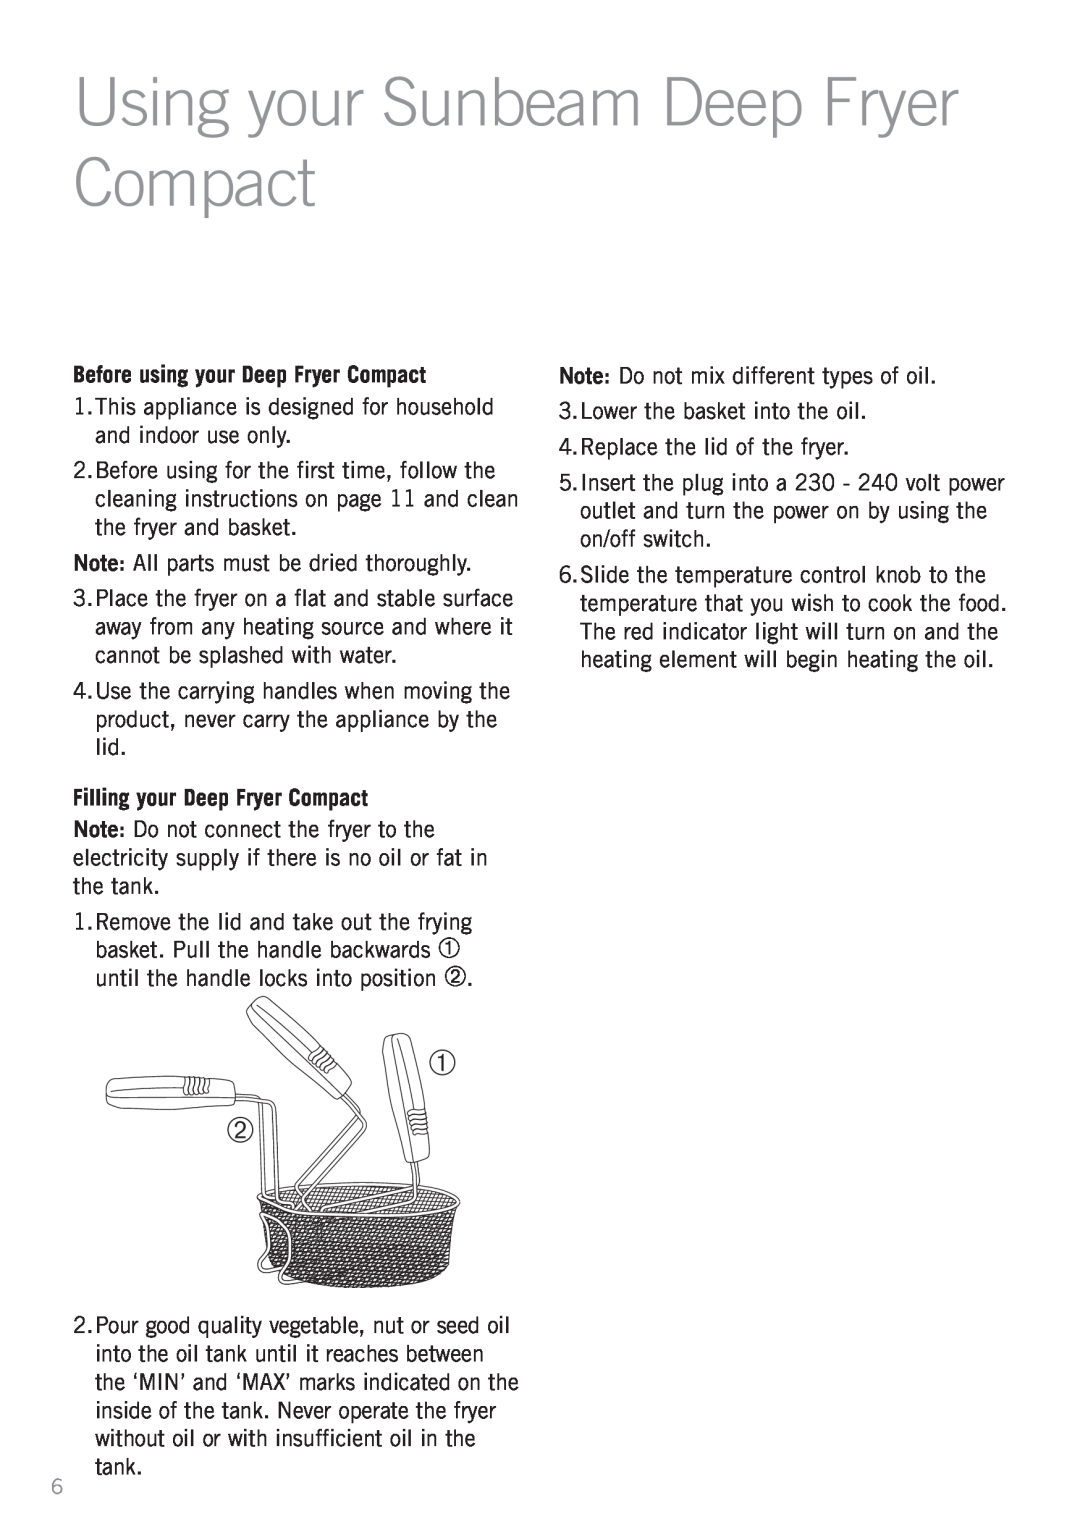 Sunbeam DF2100 manual Using your Sunbeam Deep Fryer Compact, Before using your Deep Fryer Compact 